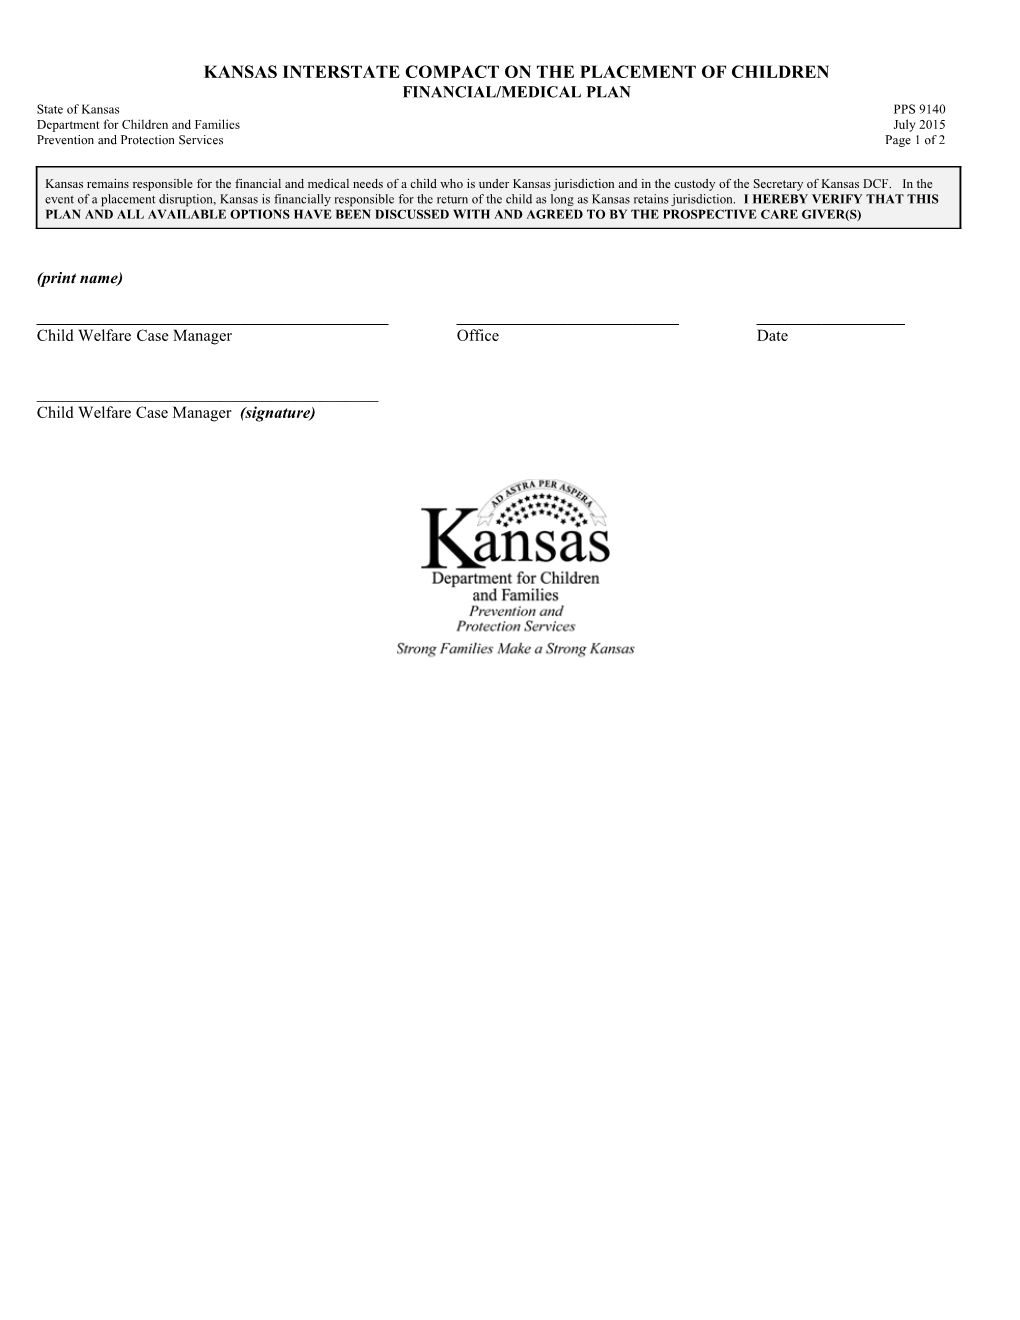 Kansas Interstate Compact on Placement of Children FINANCIAL/MEDICAL PLAN